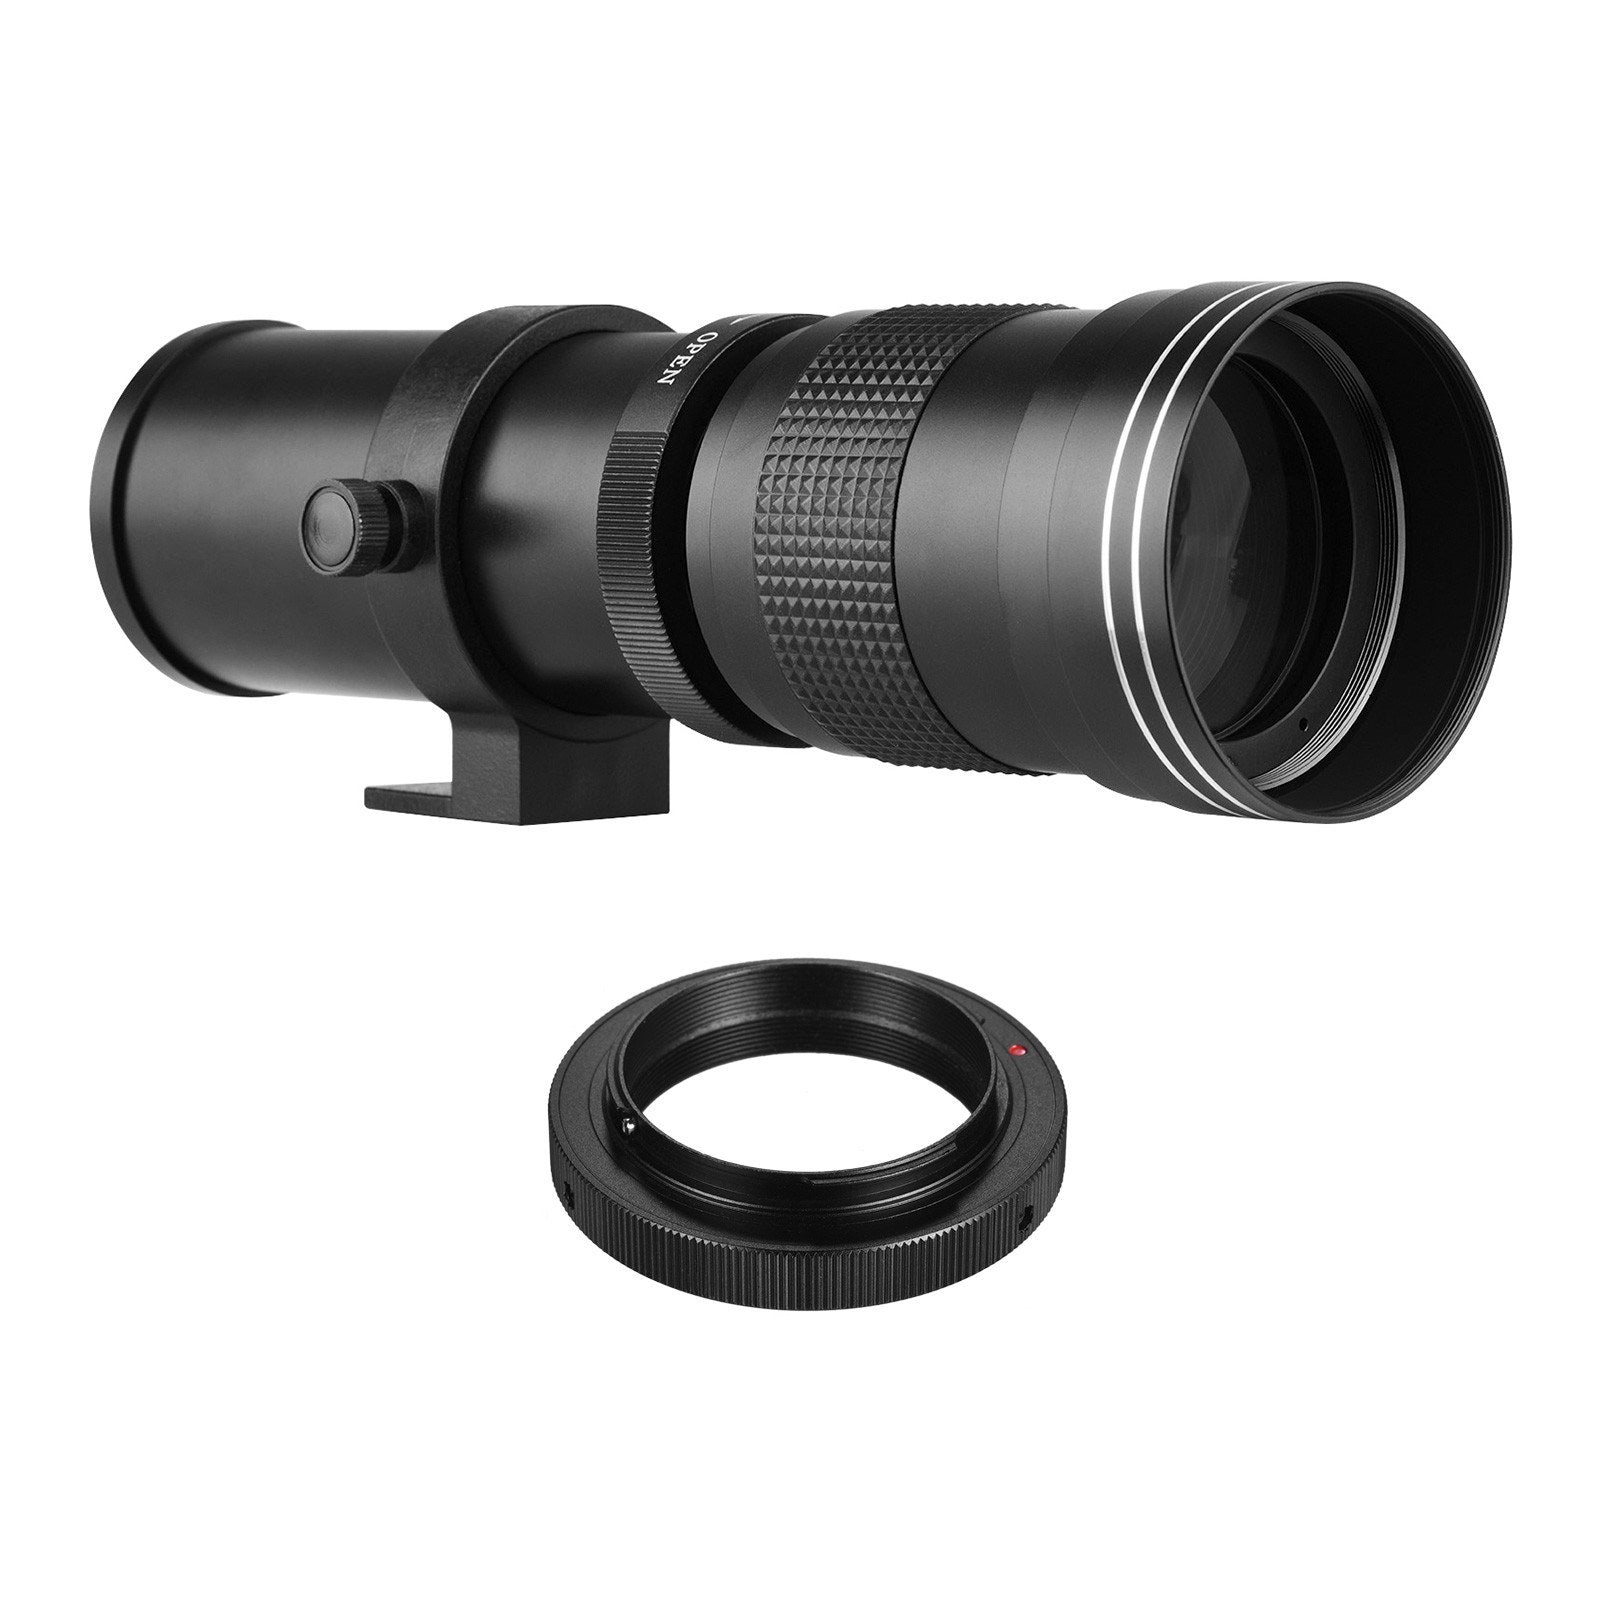 Camera MF Telephoto Zoom Lens Universal 1/4 Thread Replacement for Nikon AI-mount D50 D90 D5100 D7000 D3 D5100 D3100 D3000 D60 Cameras - Black